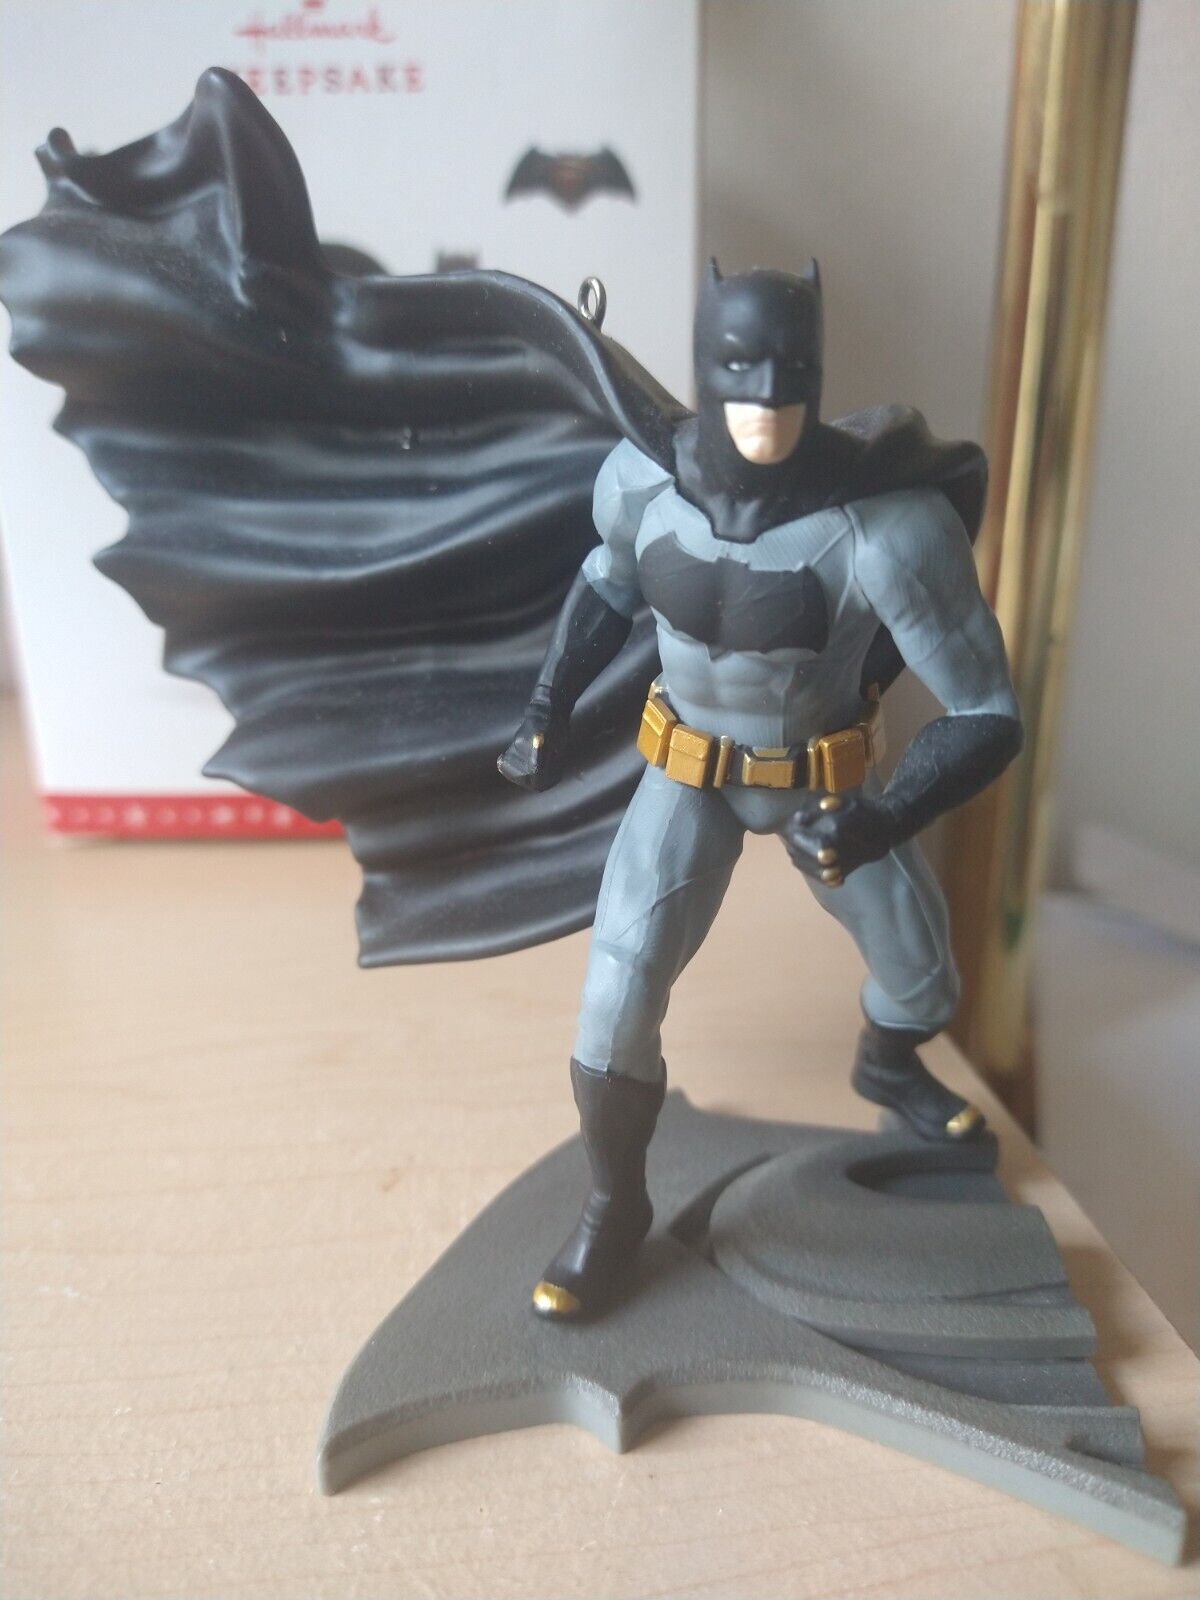 Hallmark Keepsafe Batman Dawn of Justice Ornament